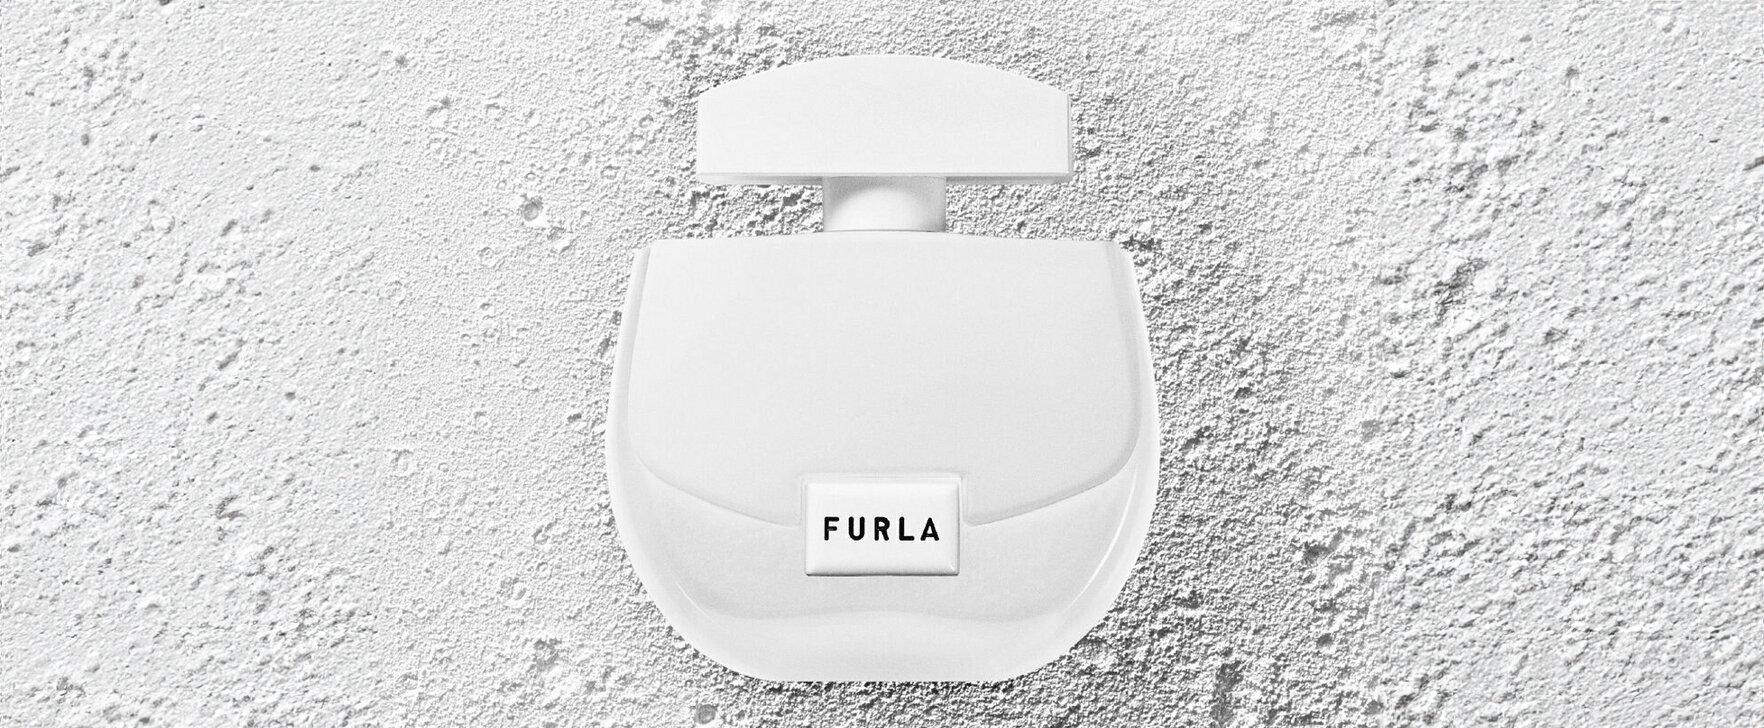 An Ode to Lightness: The New Women's Fragrance "Pura" by Furla